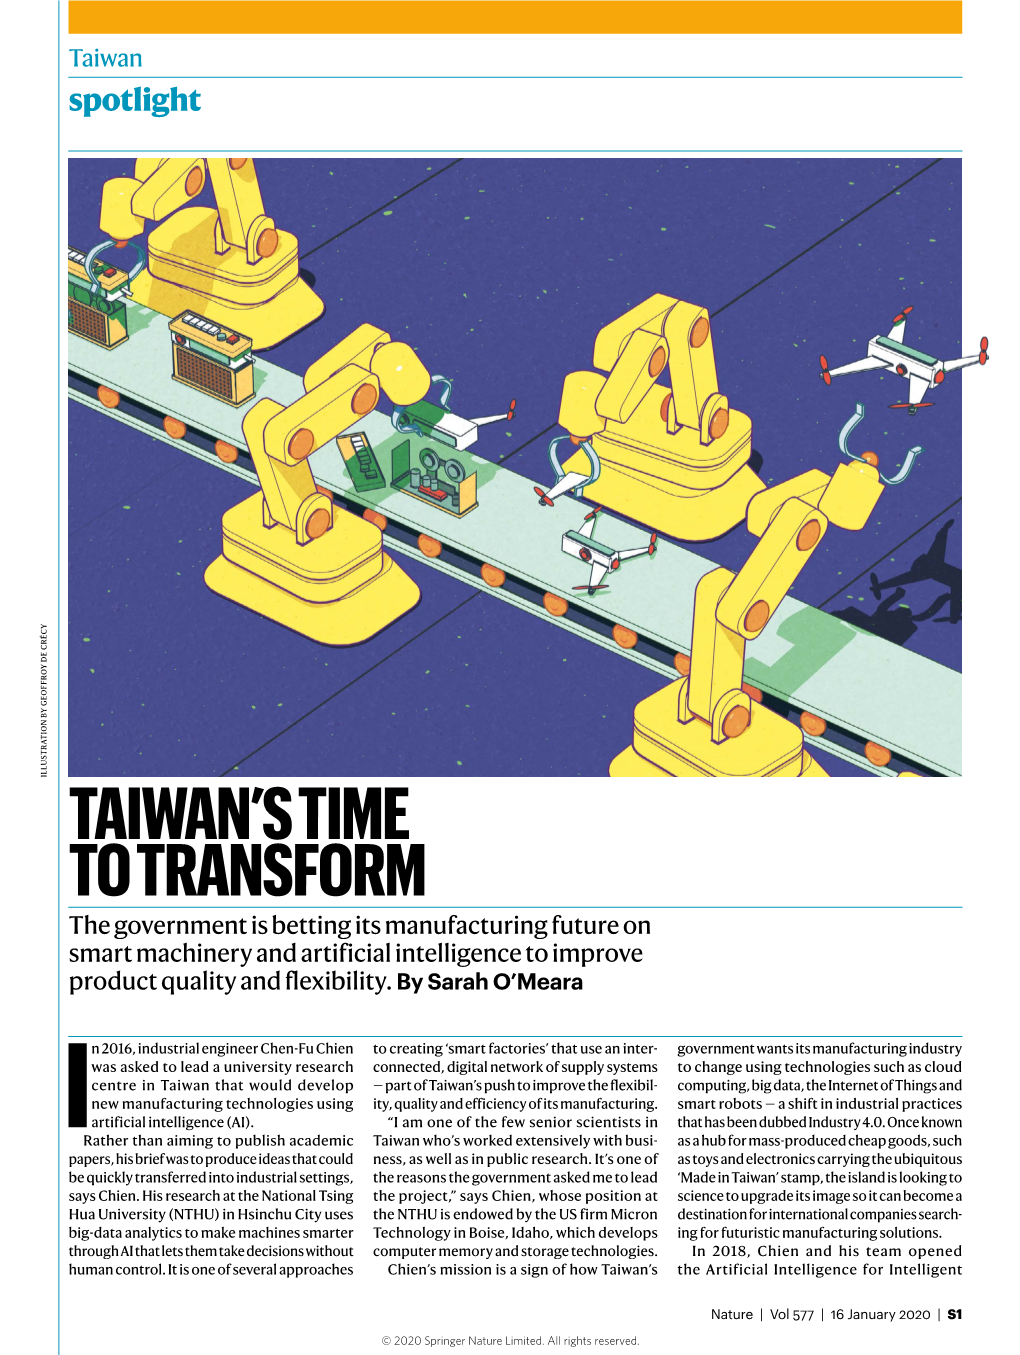 Taiwan's Time to Transform